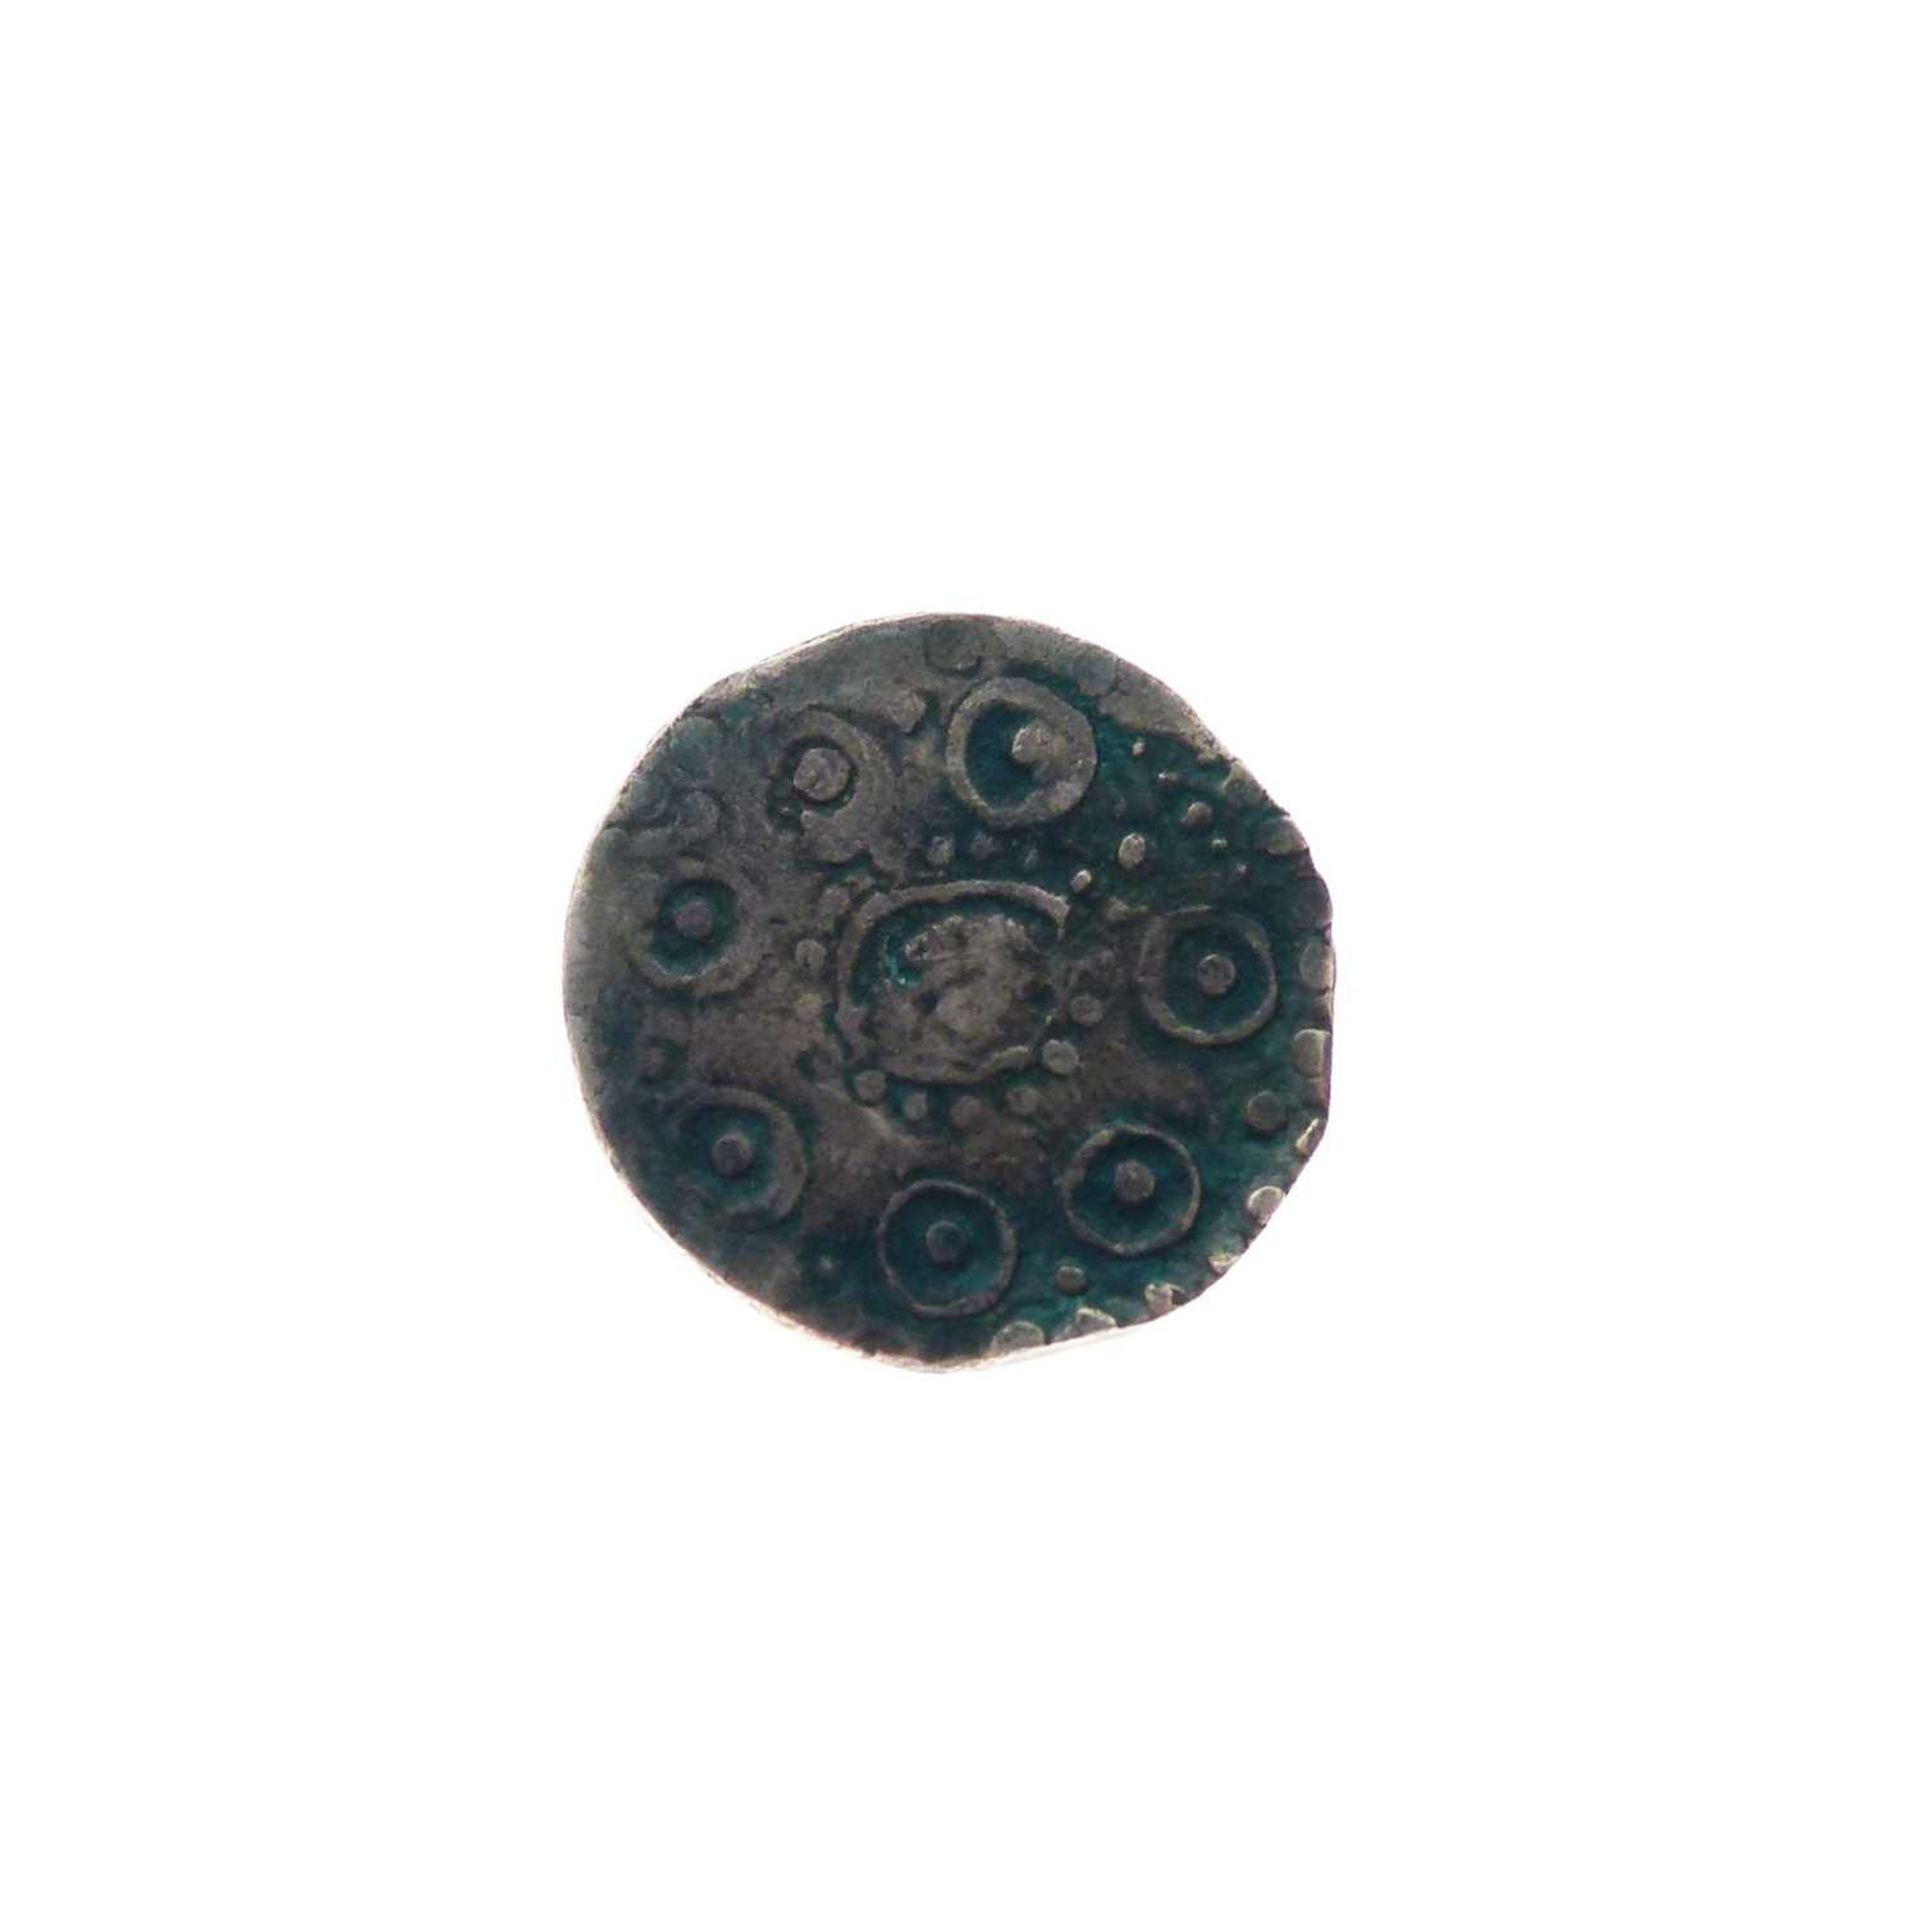 Early Anglo-Saxon Period 'Wodan' head coin